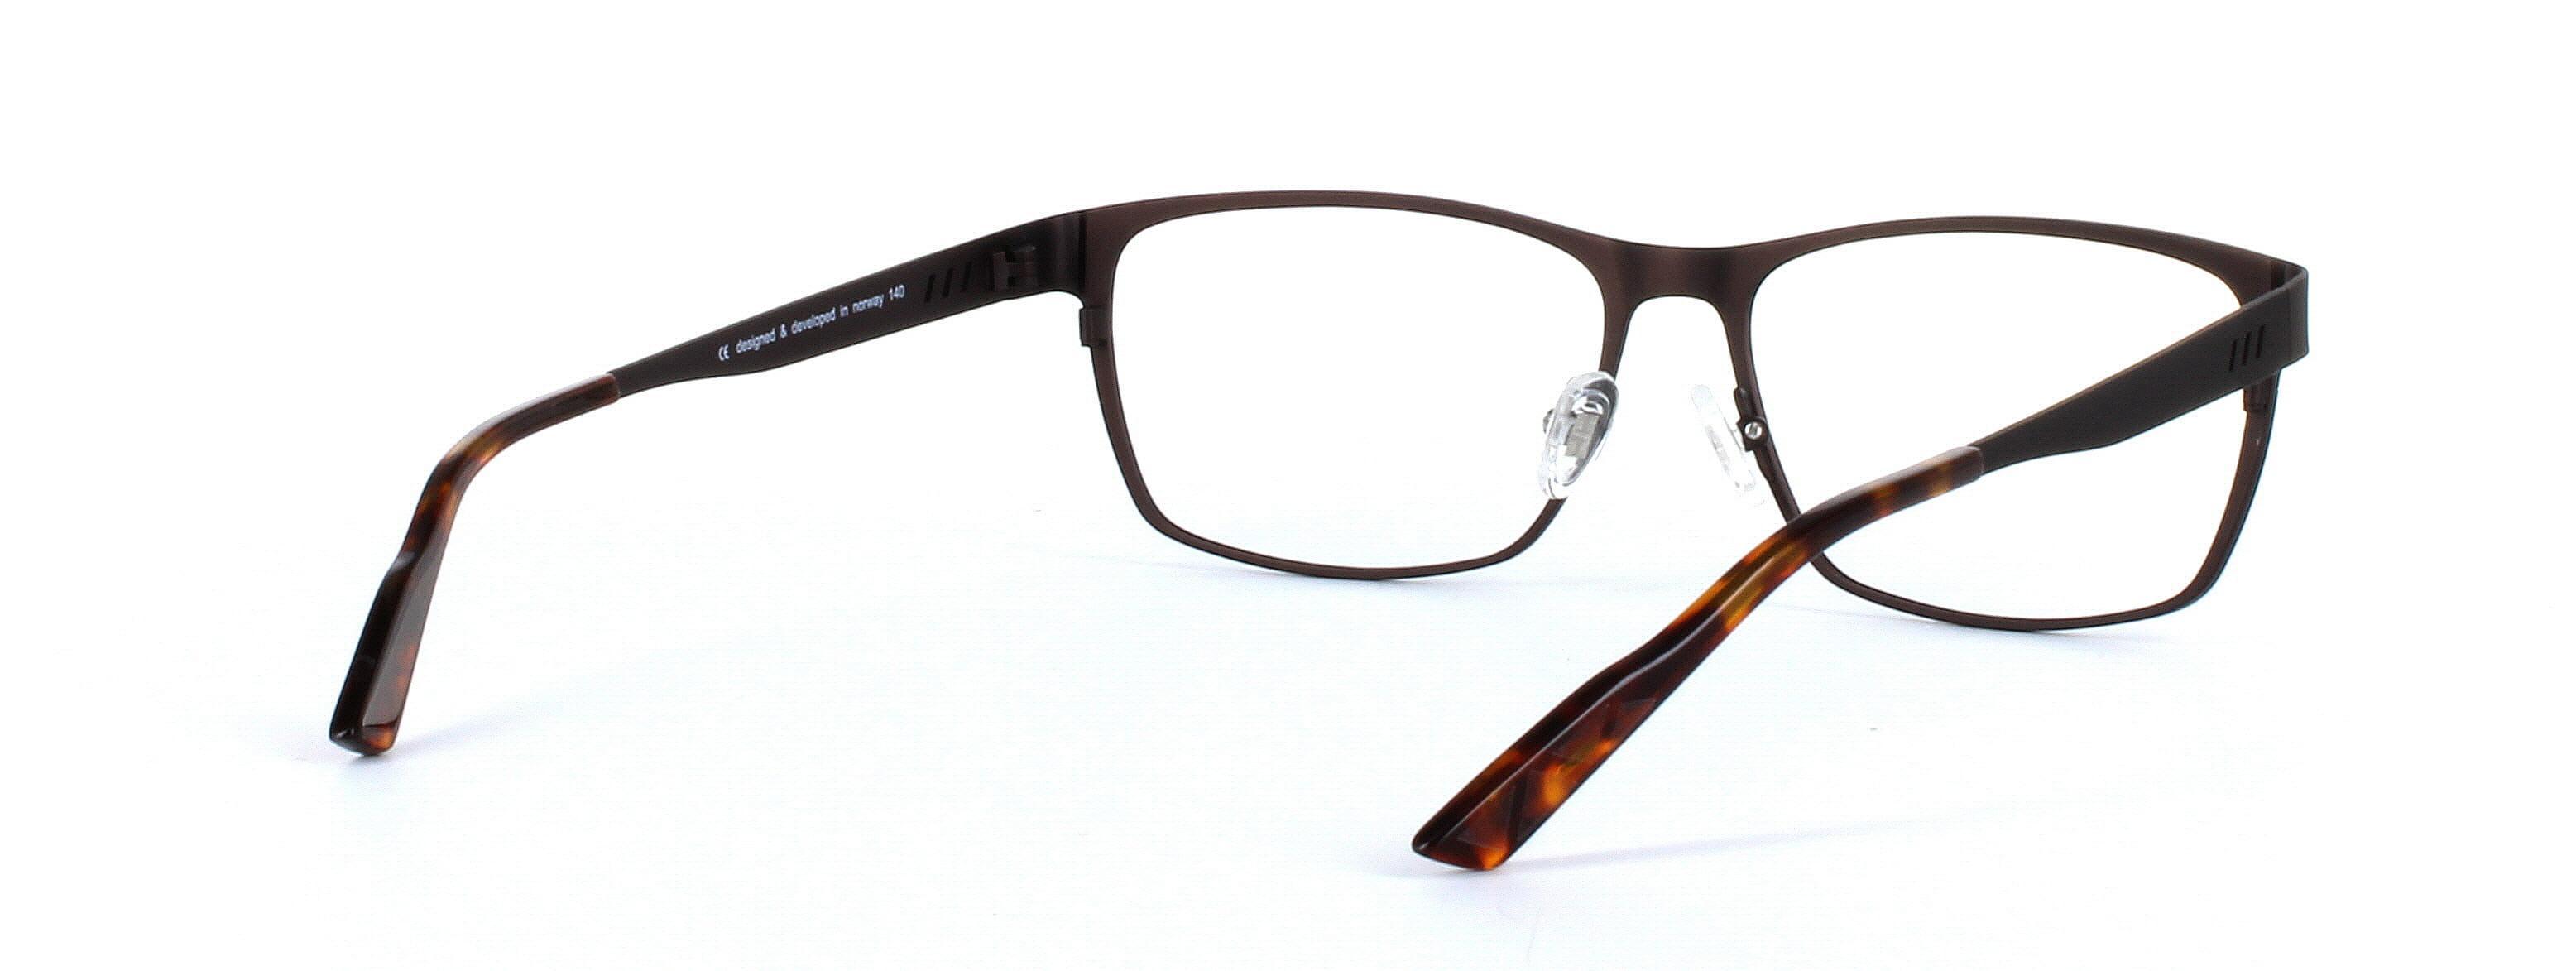 Helly Hansen HH 1017 Brown Full Rim Rectangular Metal Glasses - Image View 4